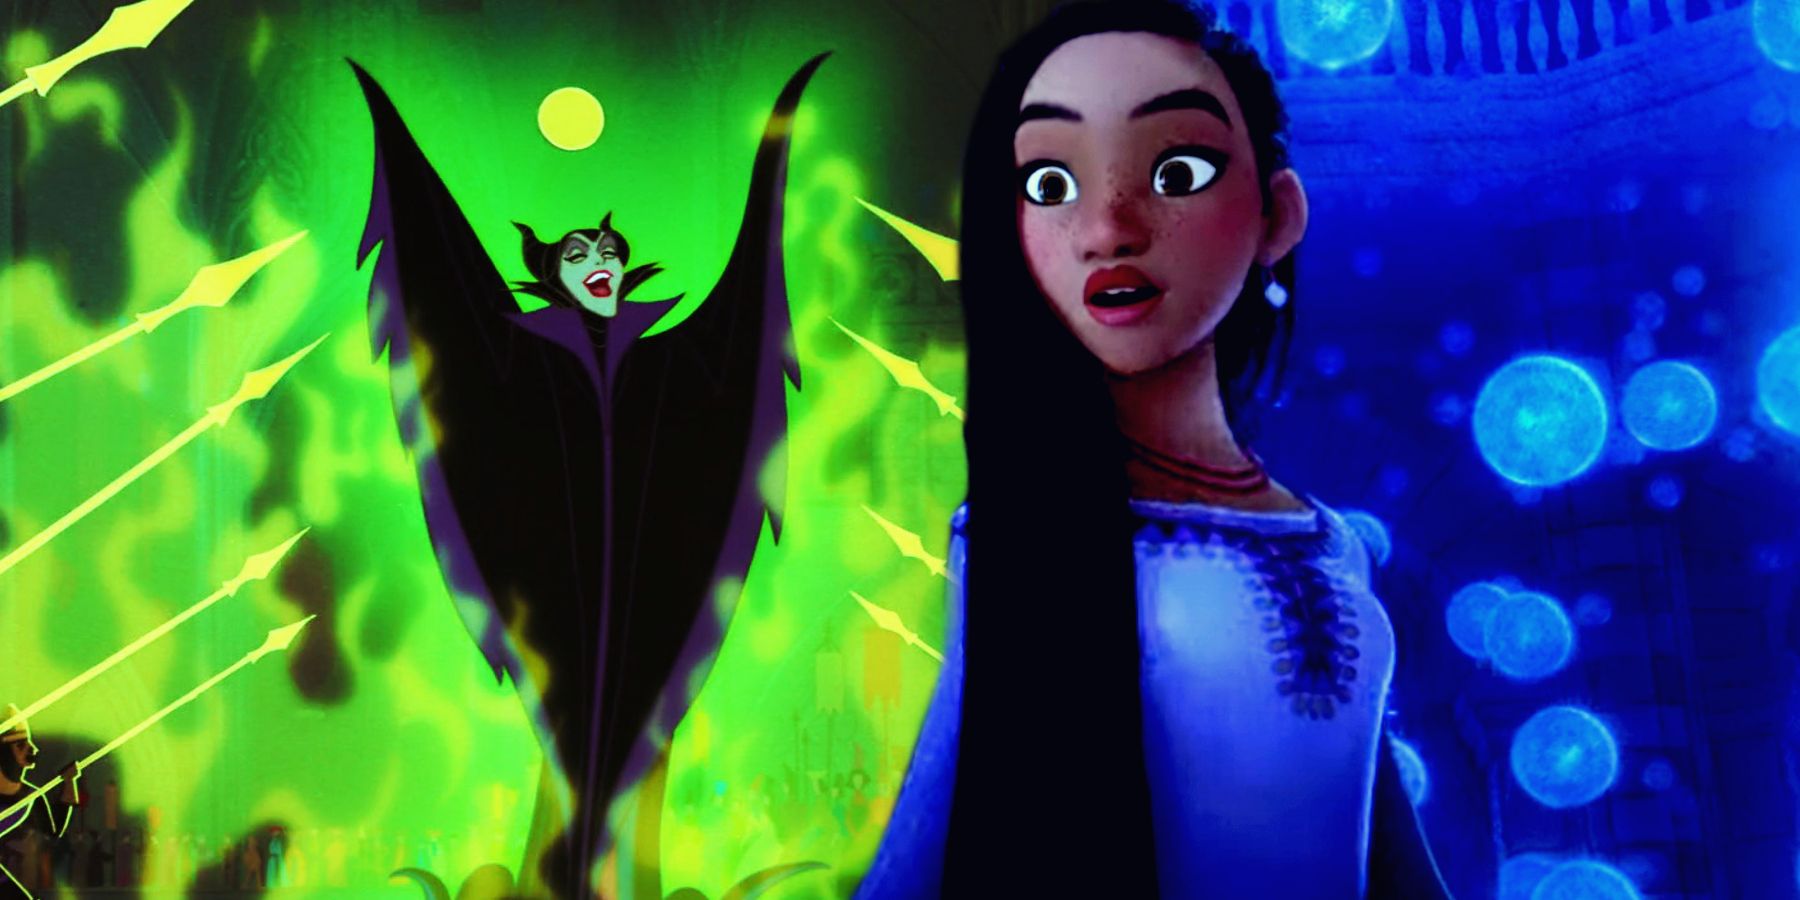 Villains - Disney Villains Art – The Wonderful World of Animation